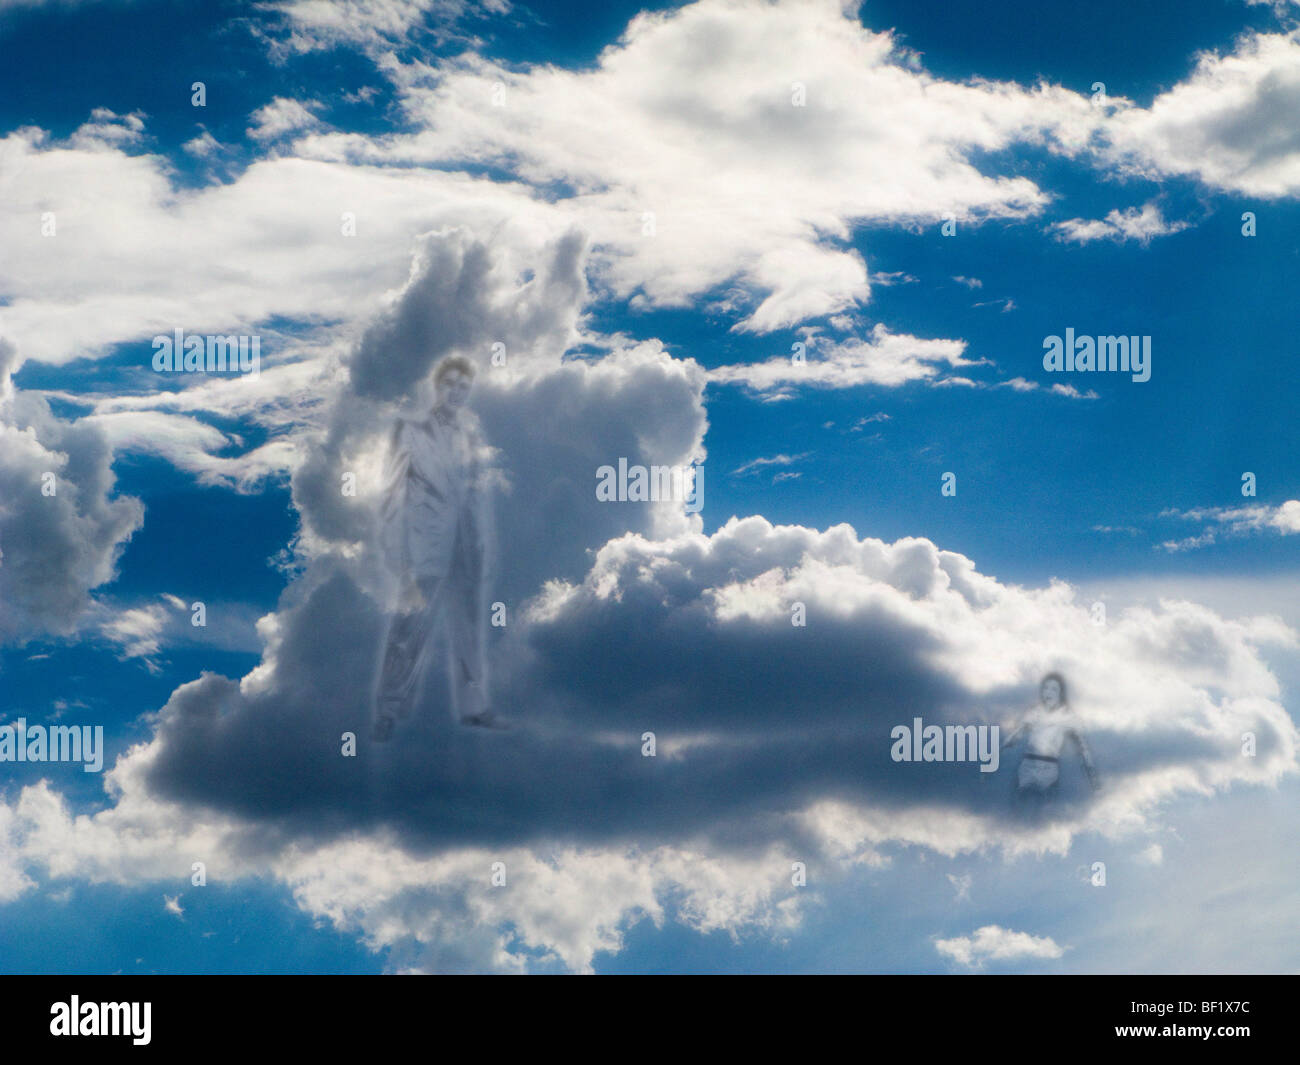 Elvis Presley and Michael Jackson in Heaven. Stock Photo